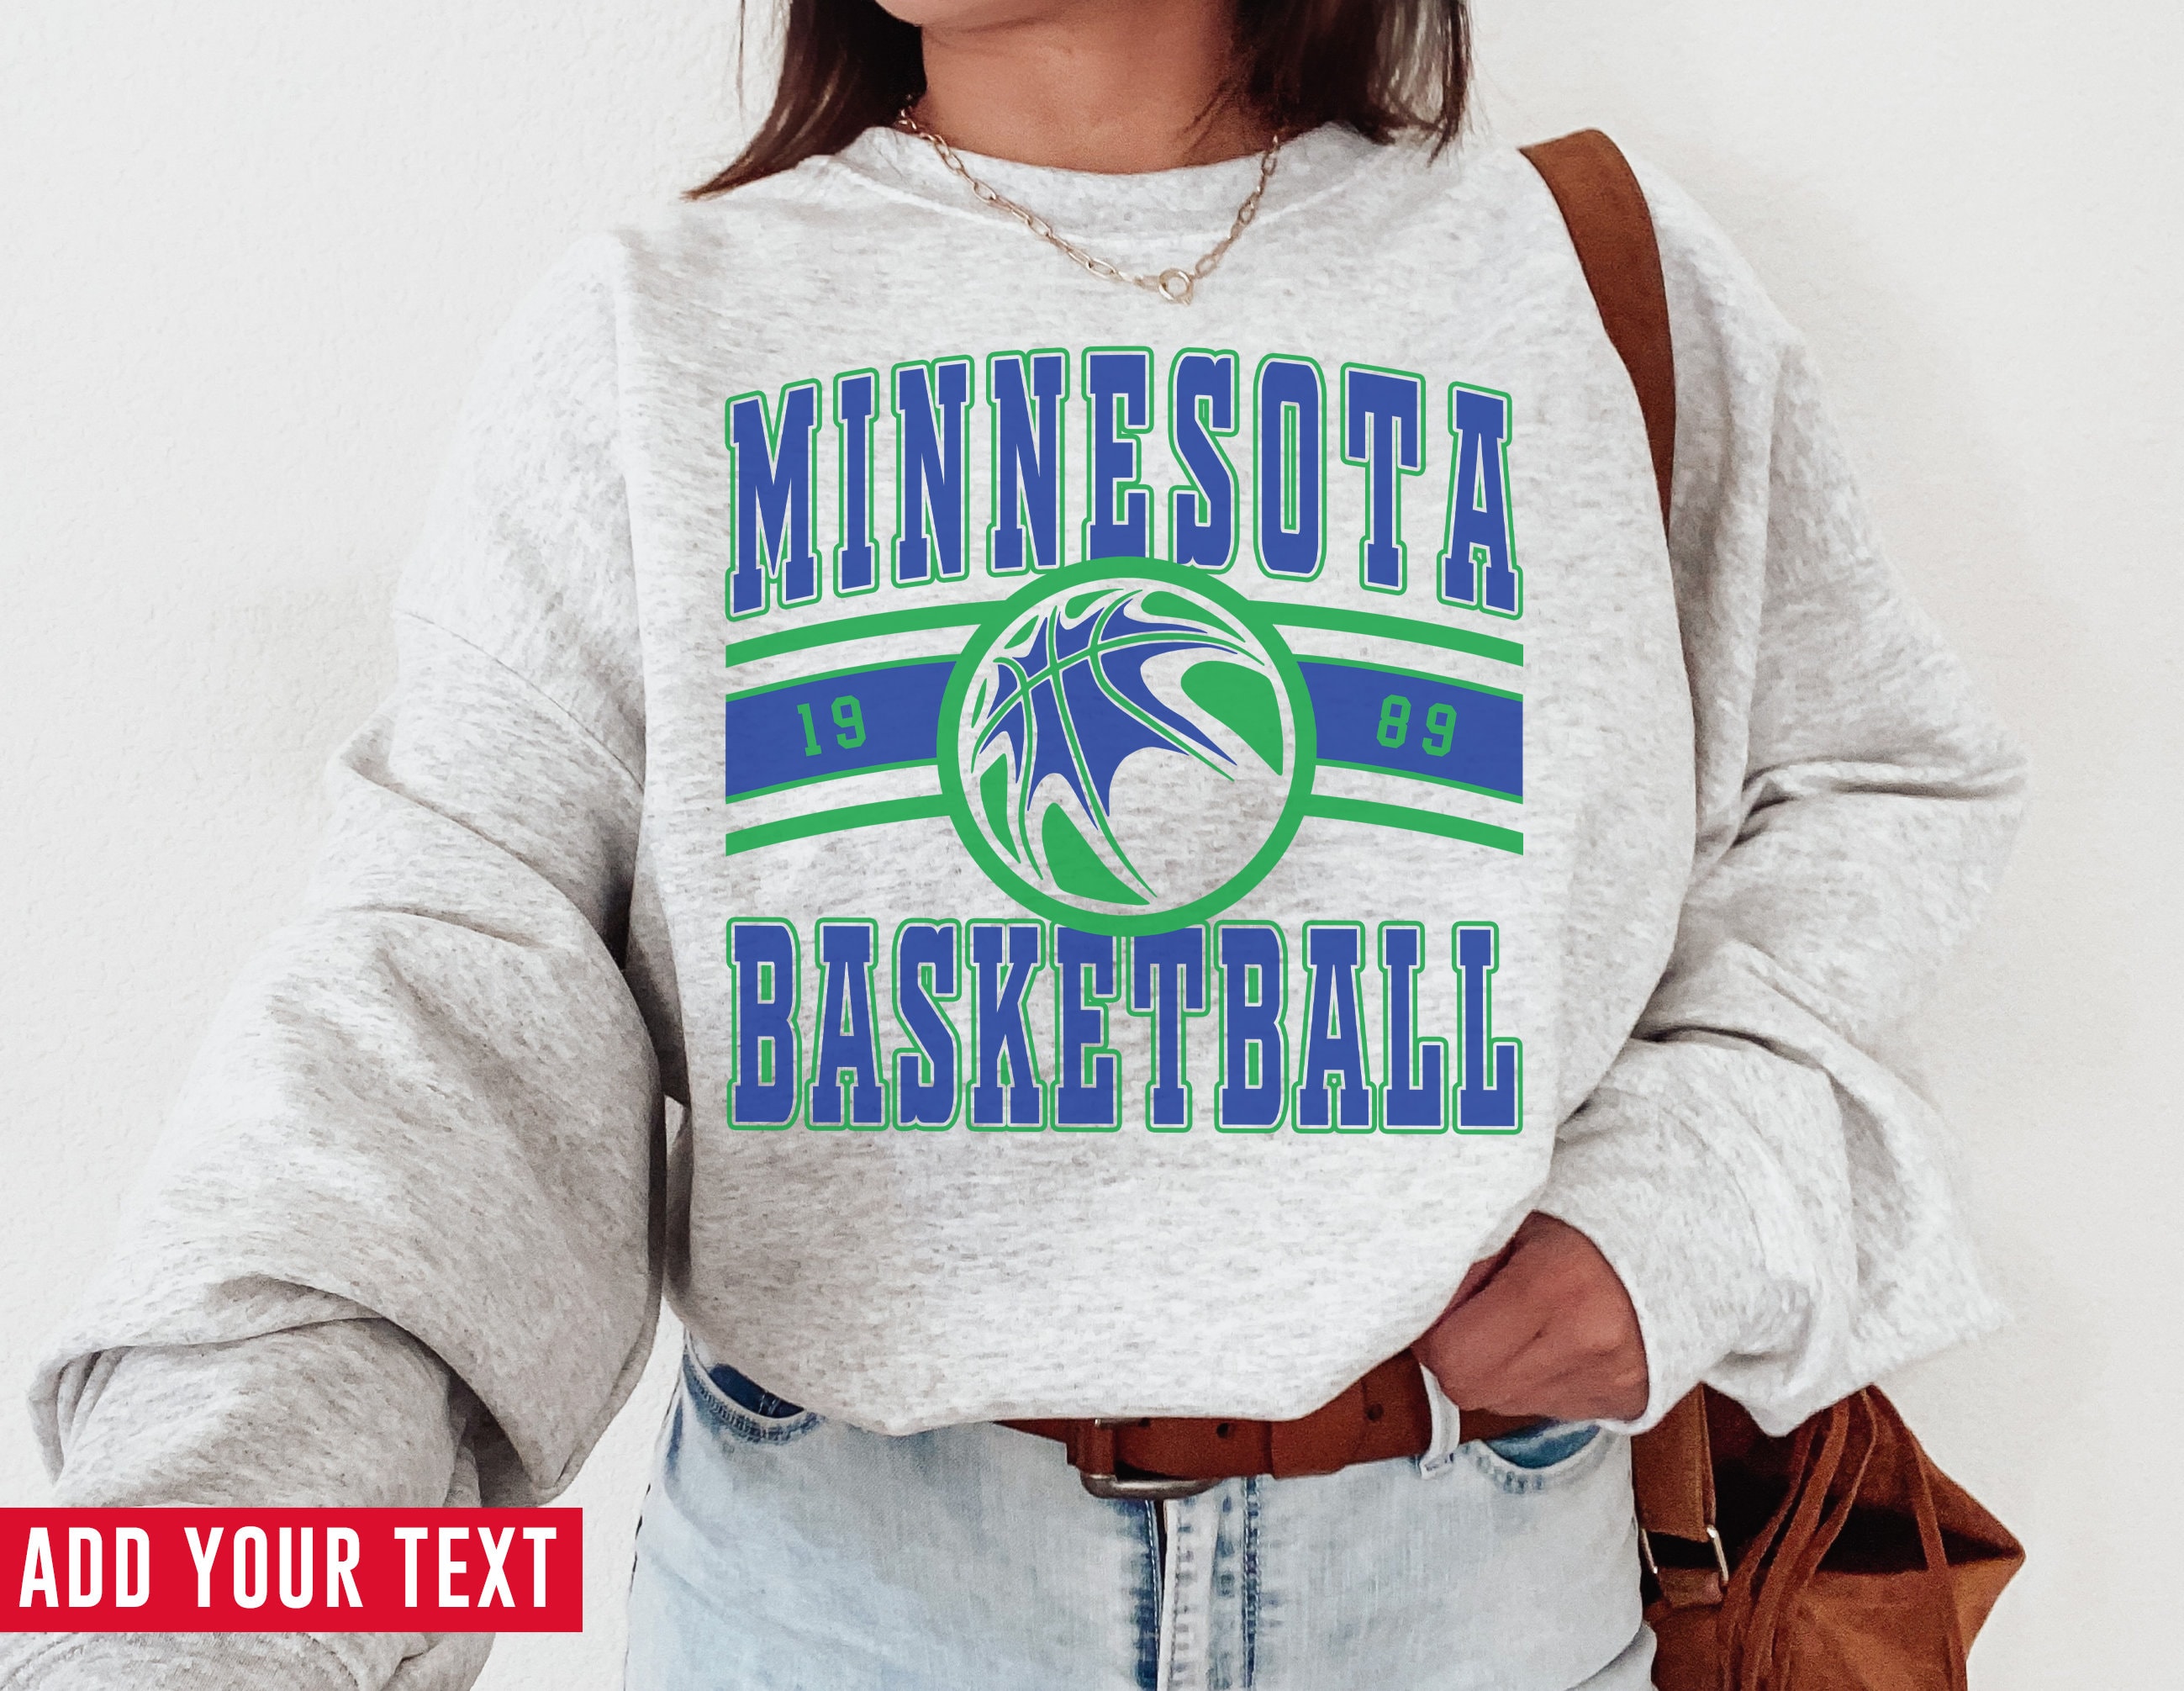 Vintage Minnesota Timberwolves Sweatshirt Size Small – Yesterday's Attic